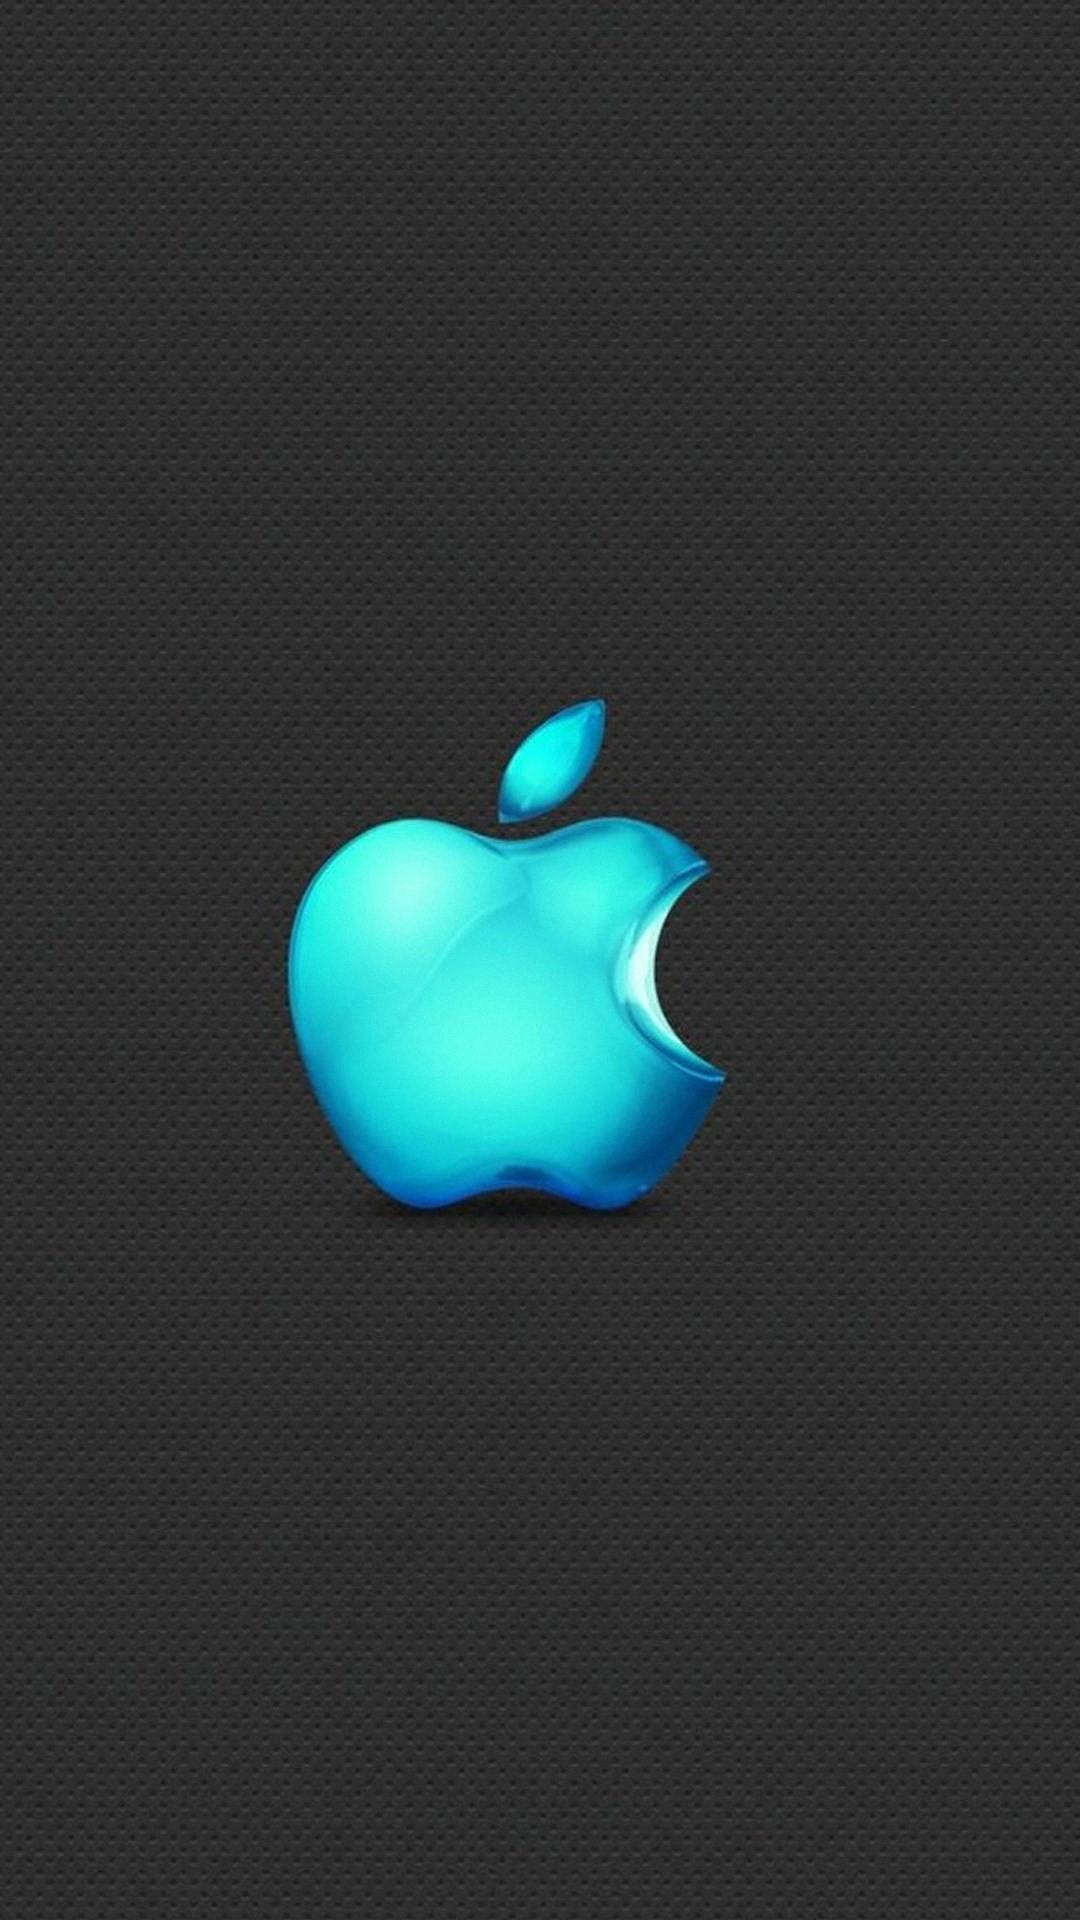 New iPhone Logo HD 4k Wallpapers - Wallpaper Cave